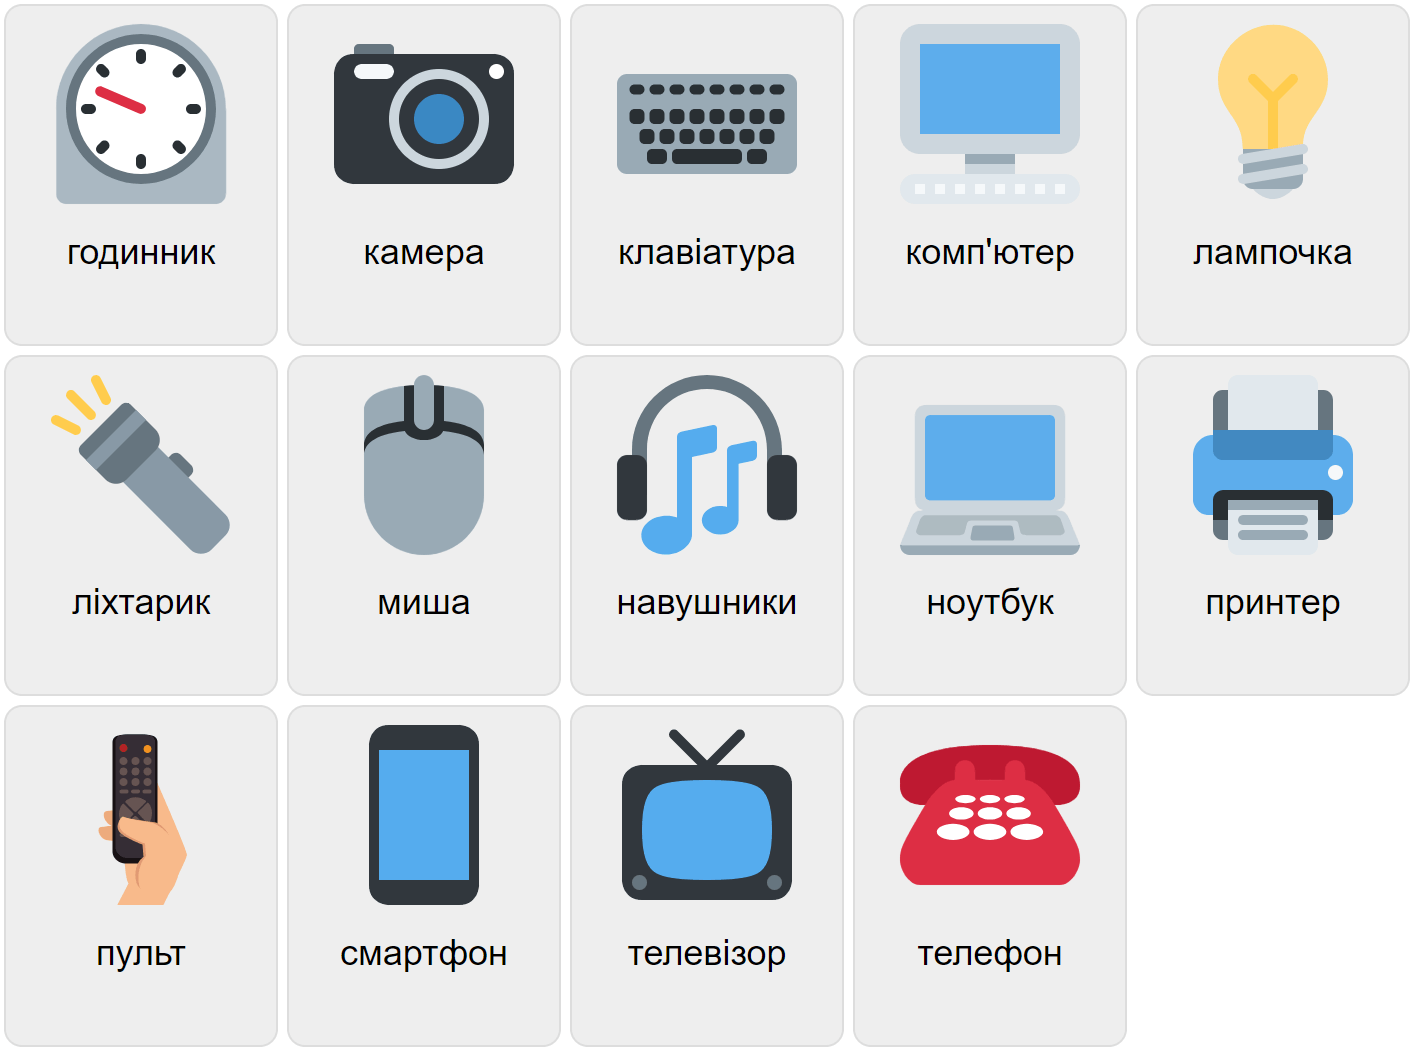 Electronics in Ukrainian